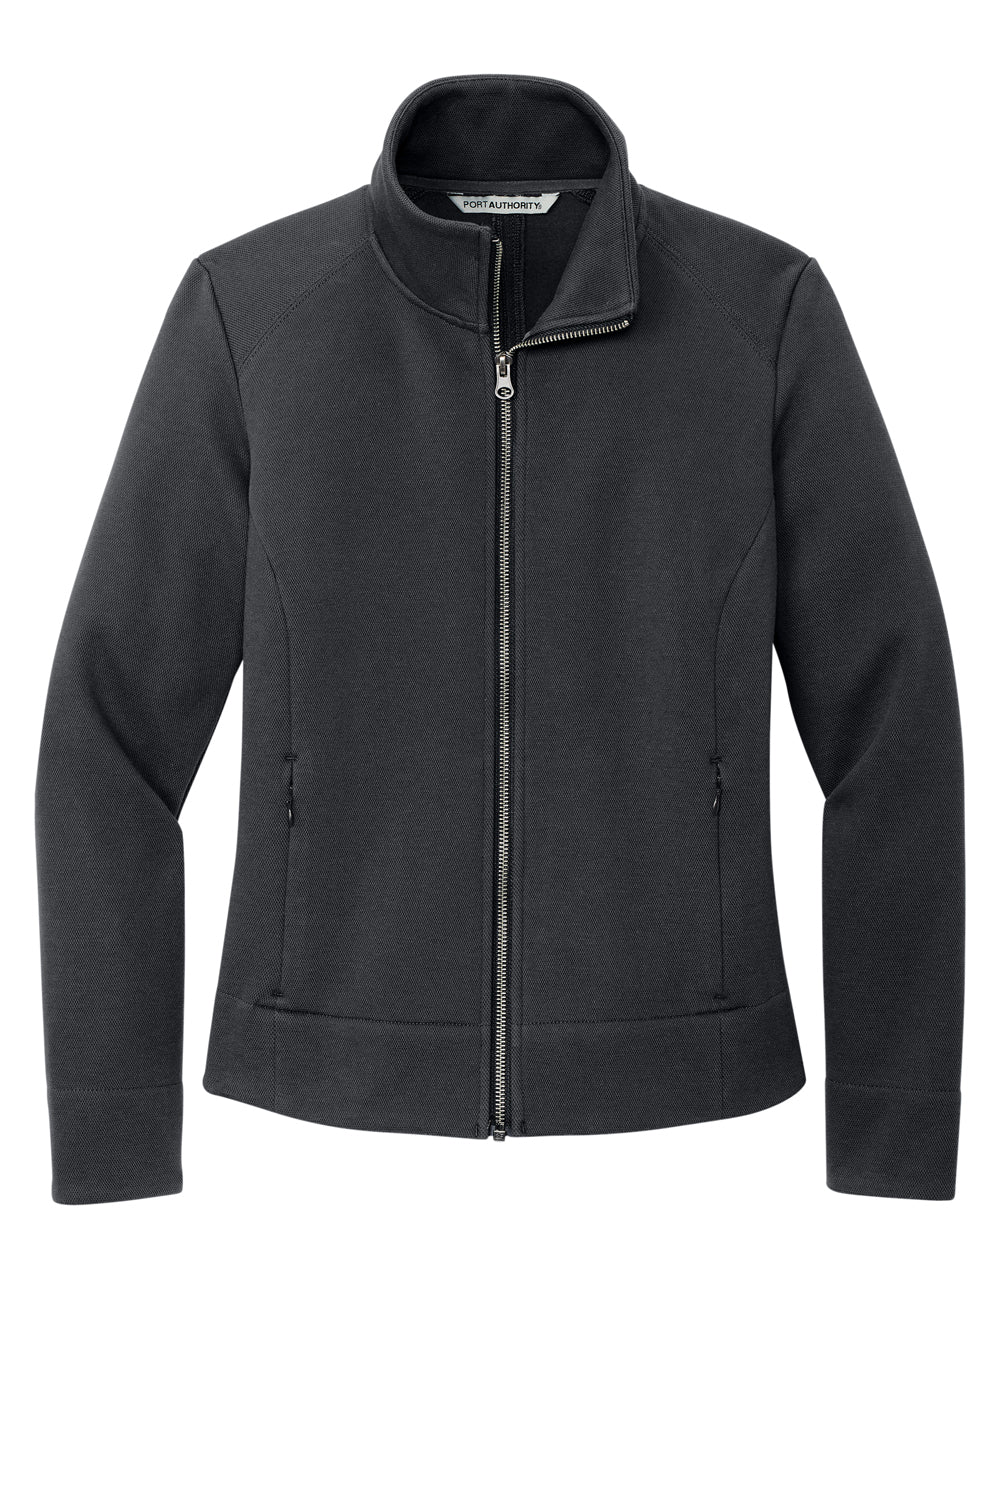 Port Authority L422 Womens Network Fleece Full Zip Jacket Charcoal Grey Flat Front